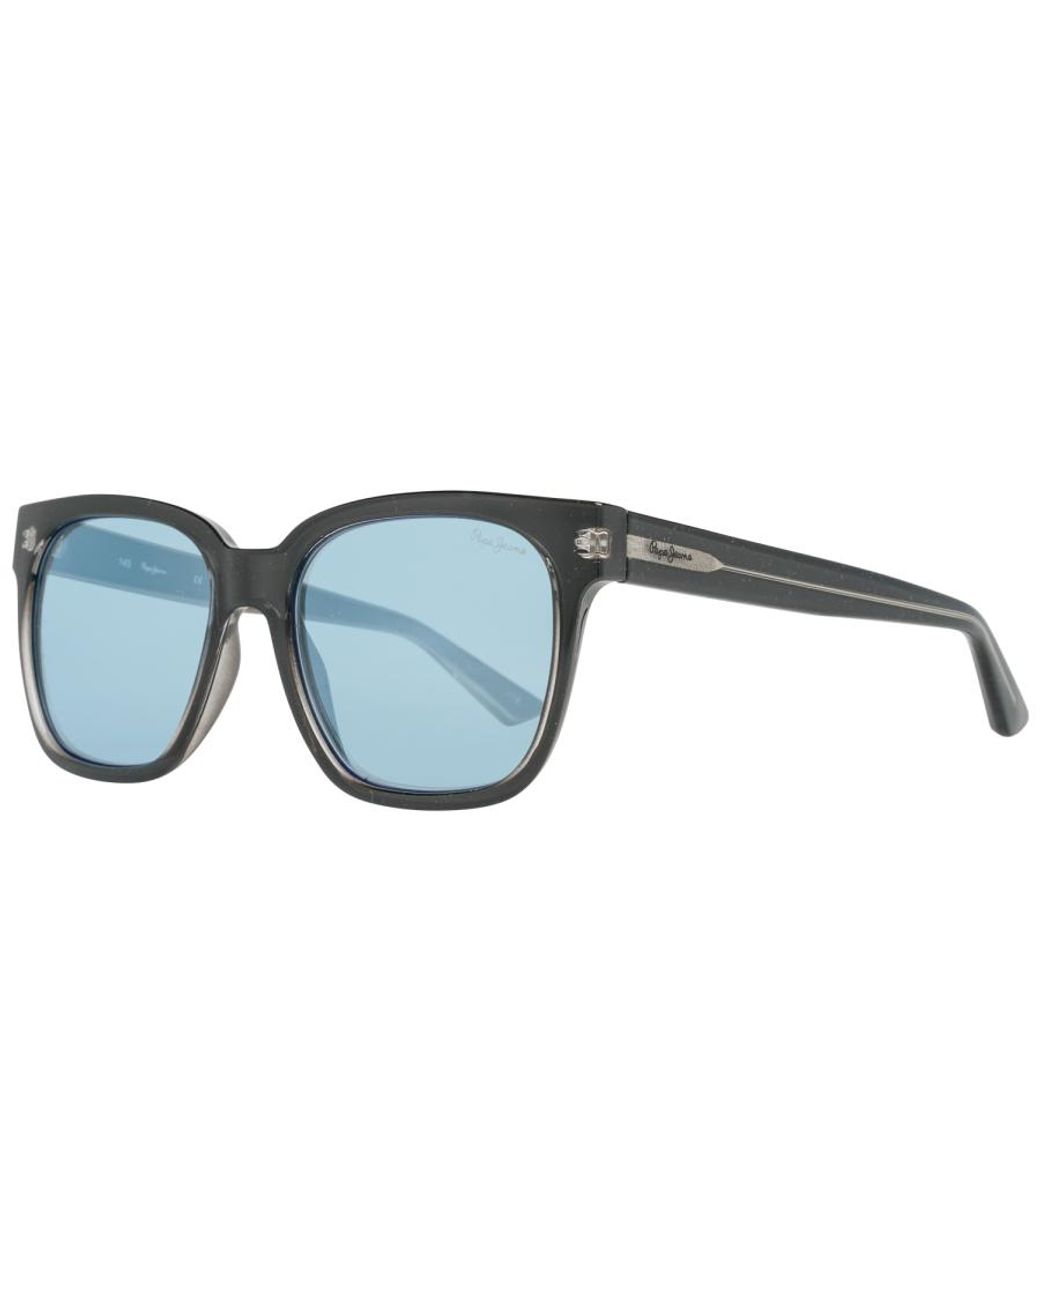 Pepe Jeans Sunglasses Pj7356 C1 55 in het Blauw | Lyst NL